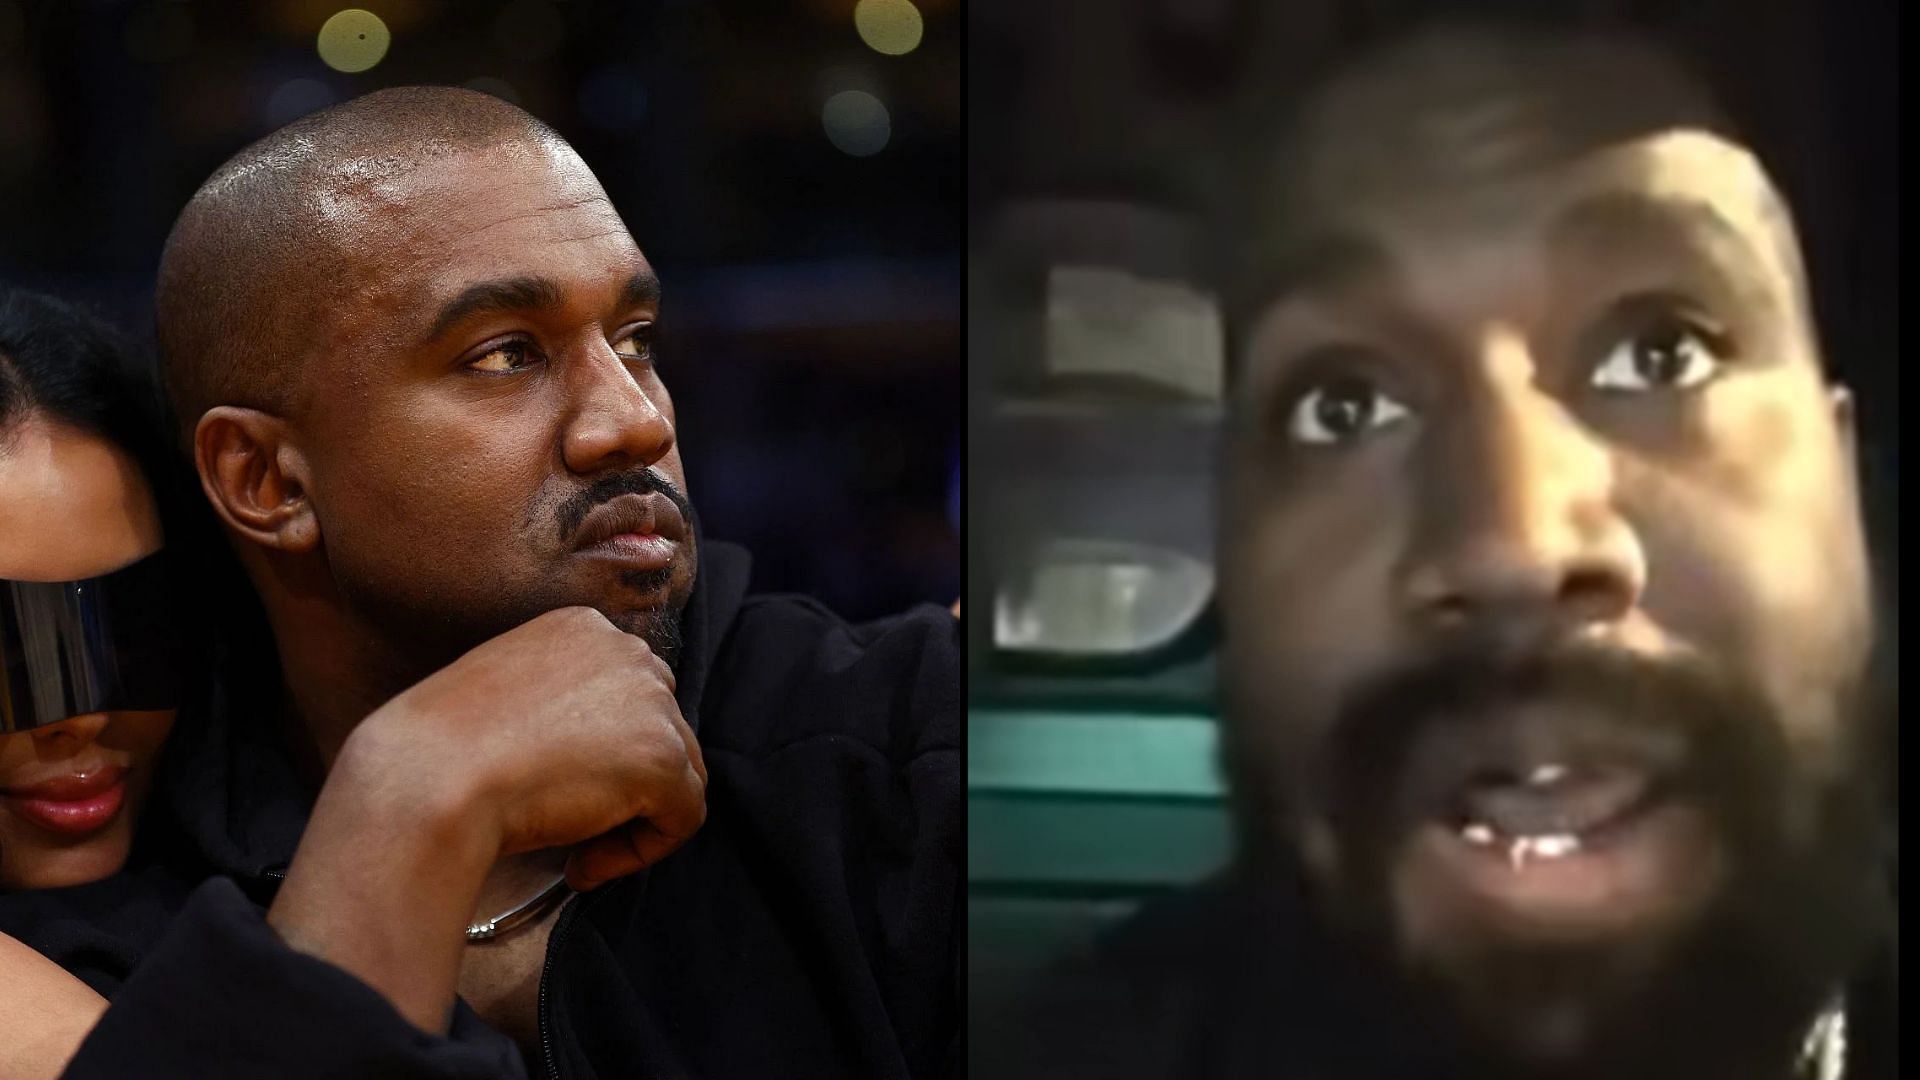 Kanye West aka Ye has claimed to make millions off a minimalist Super Bowl ad